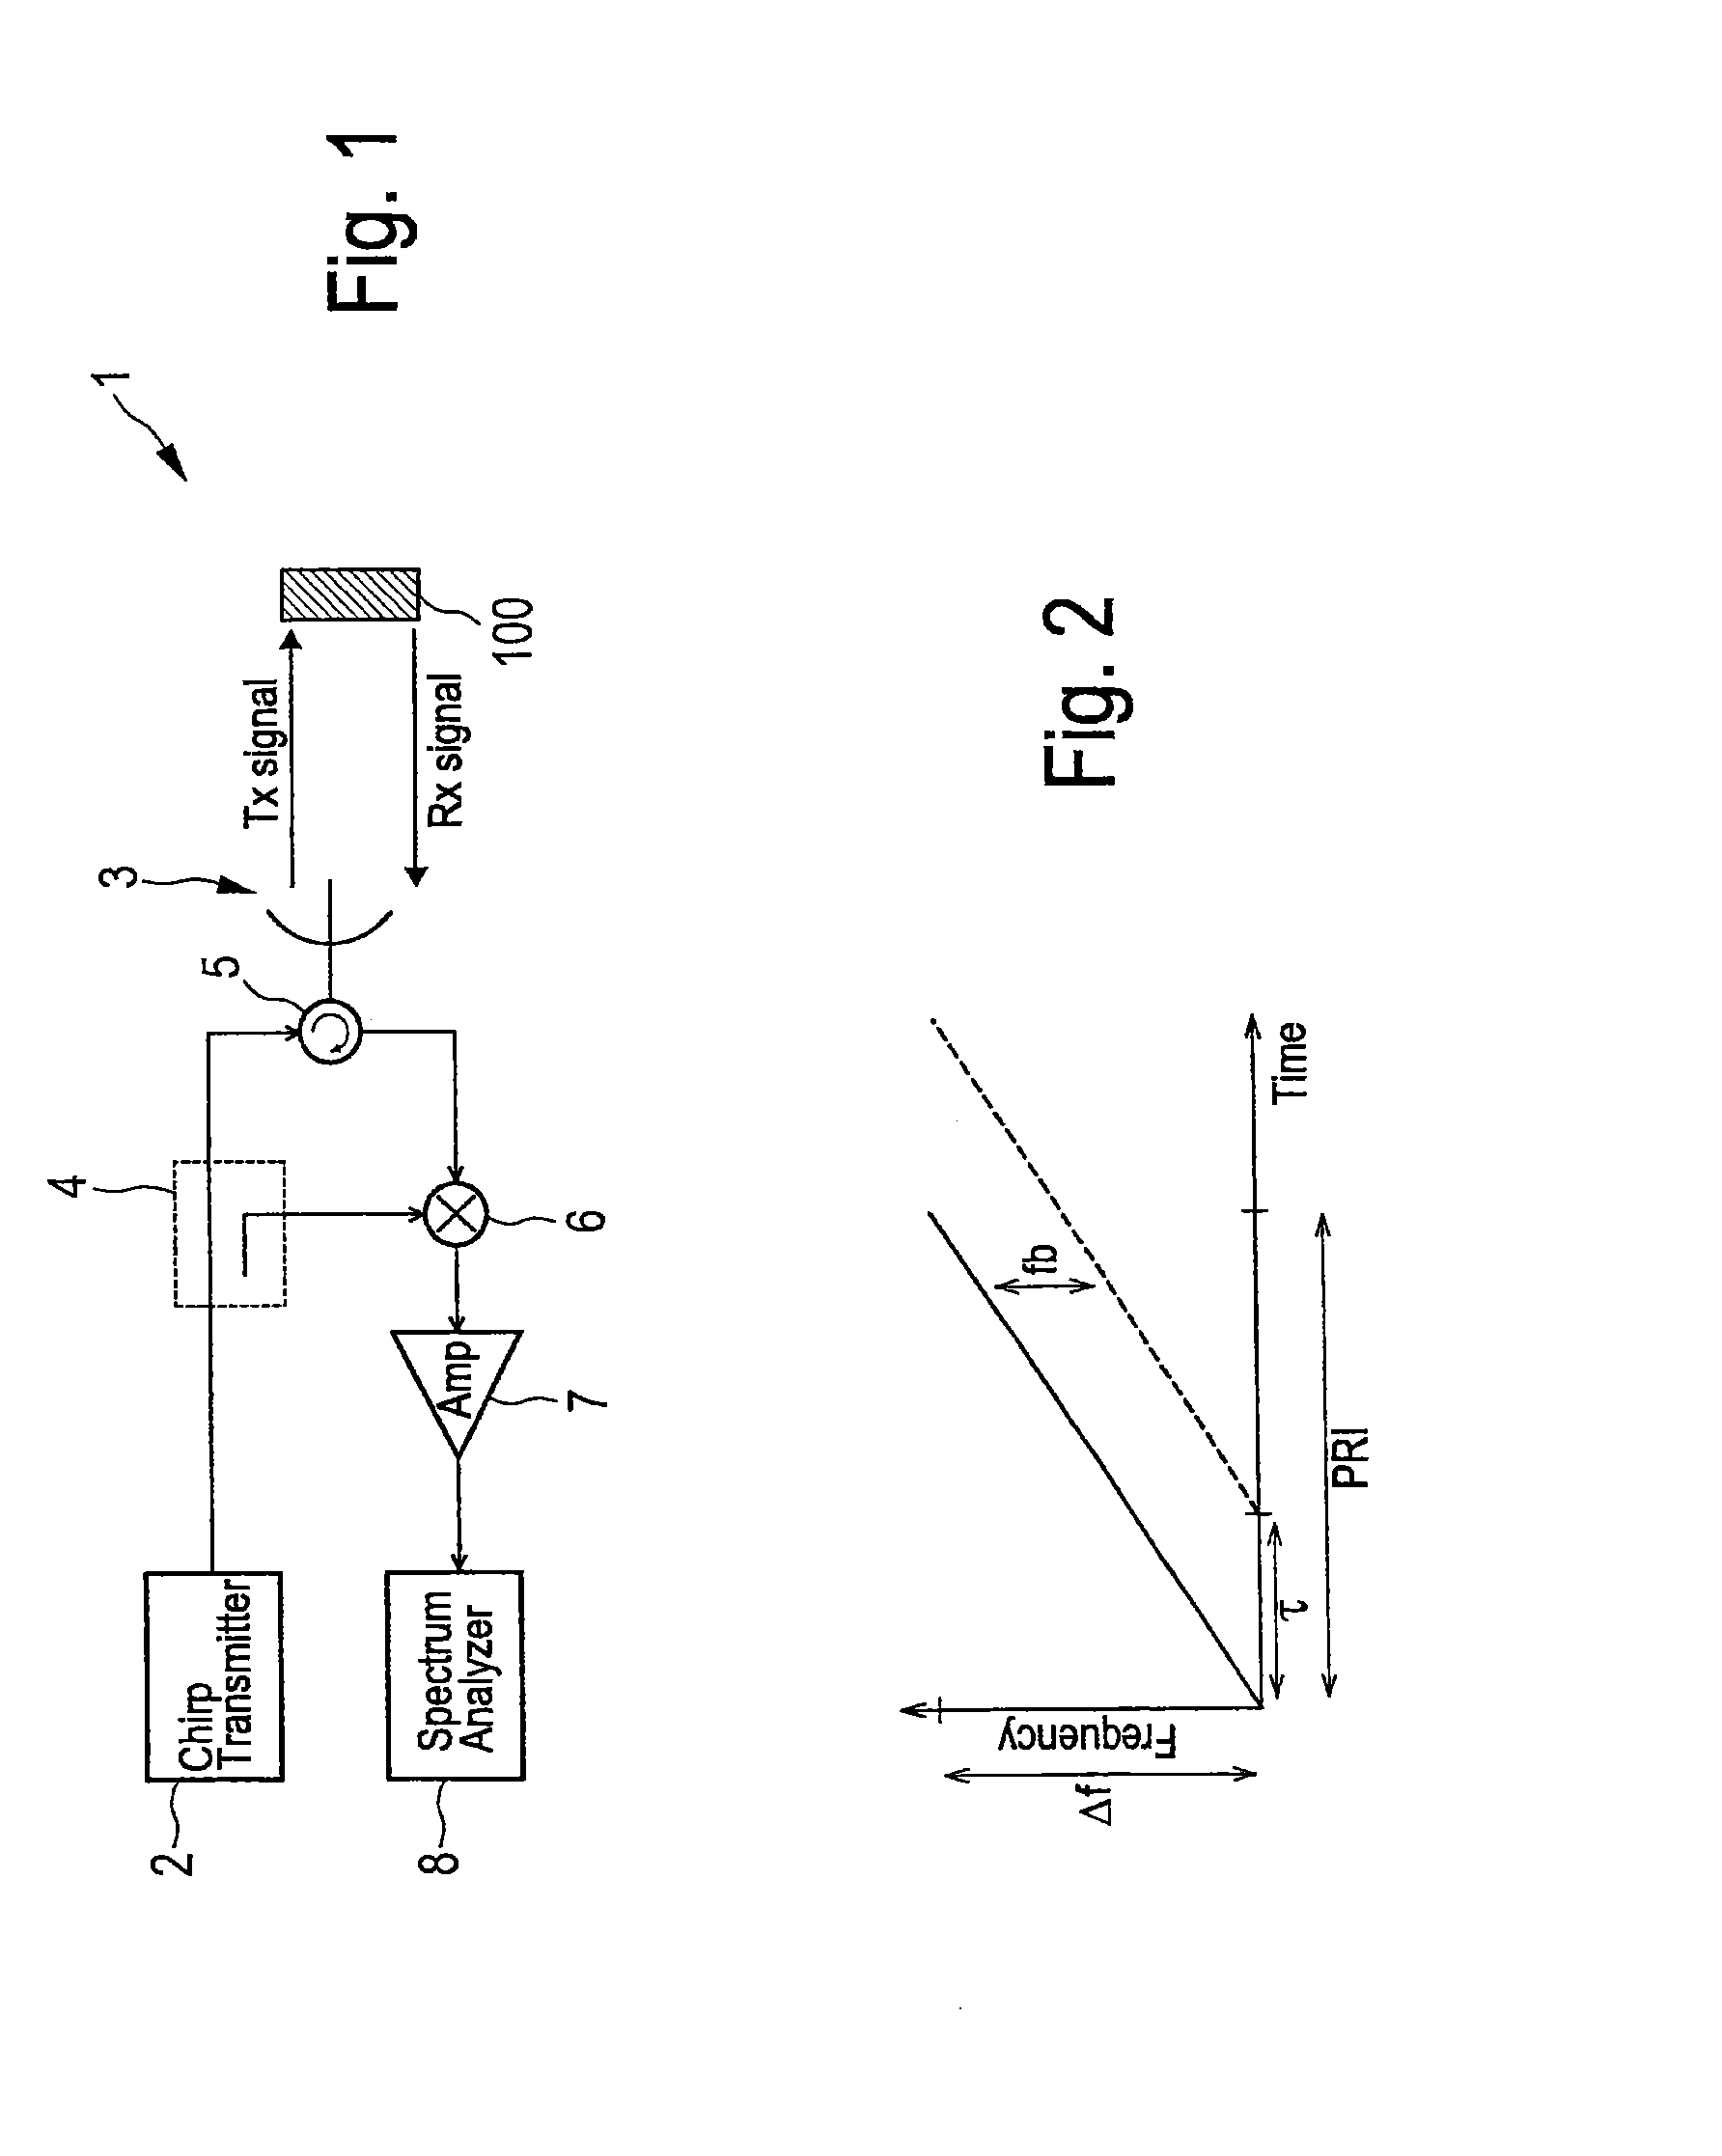 Radar apparatus and method